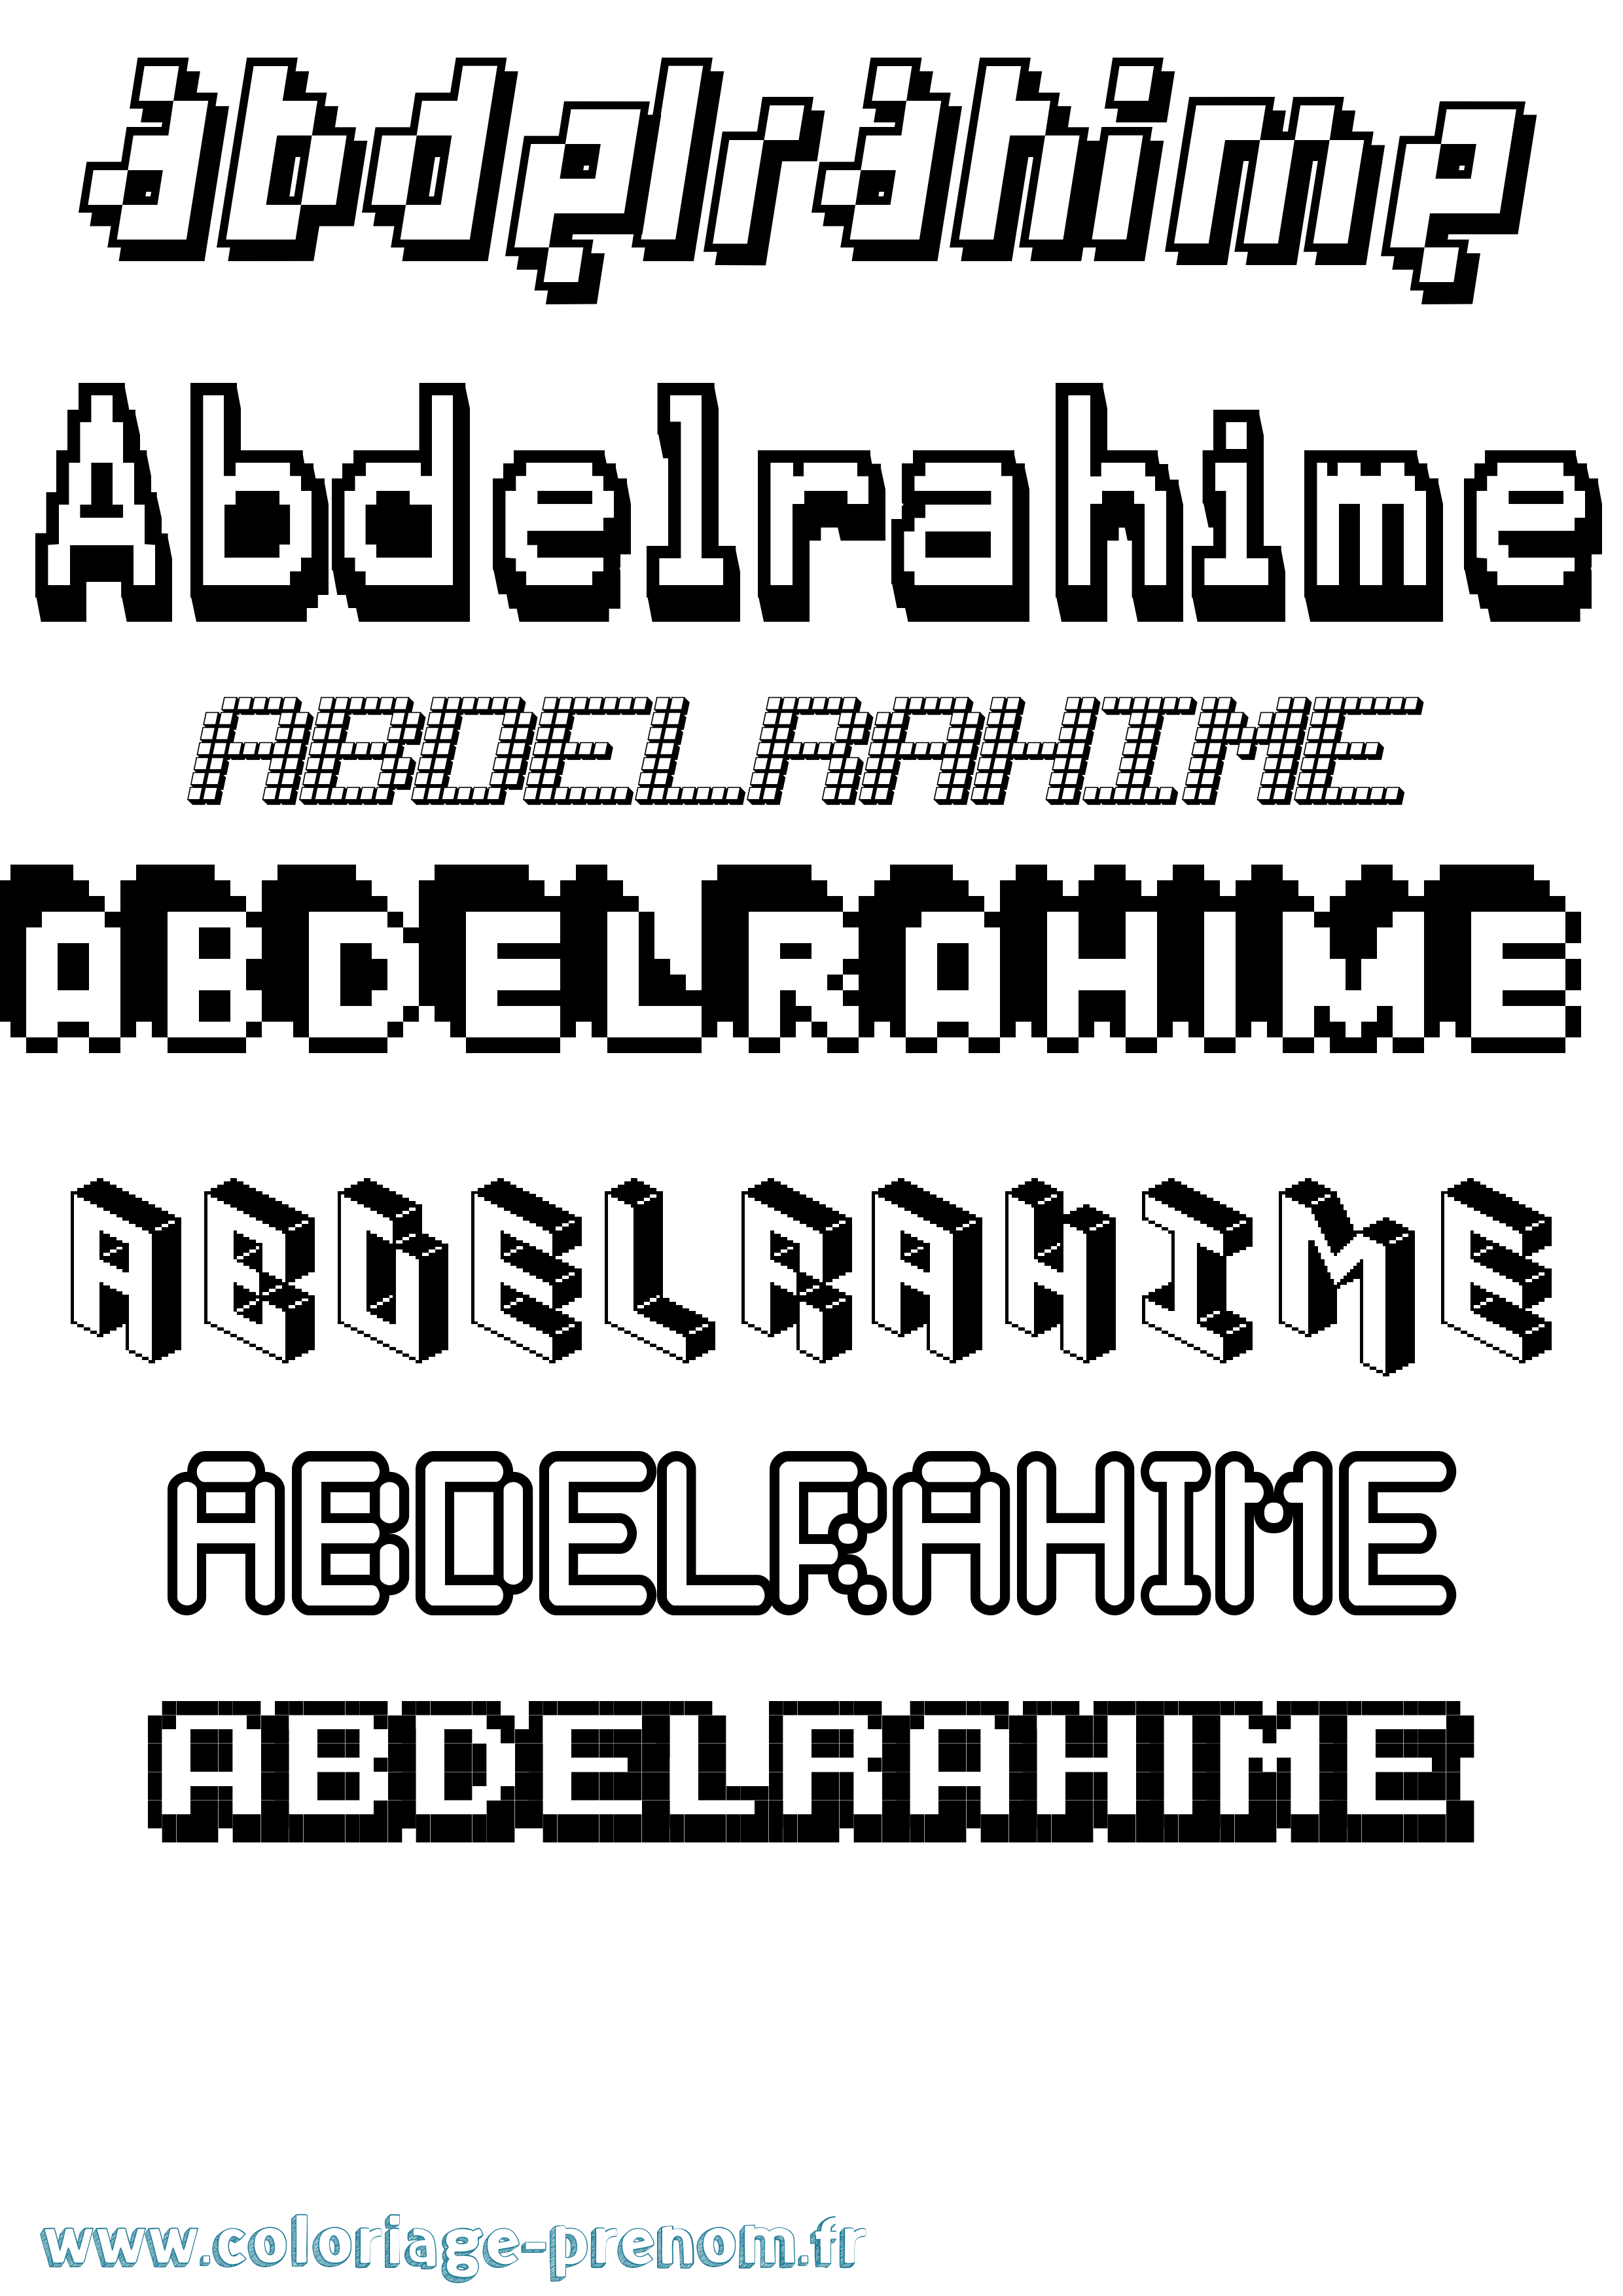 Coloriage prénom Abdelrahime Pixel